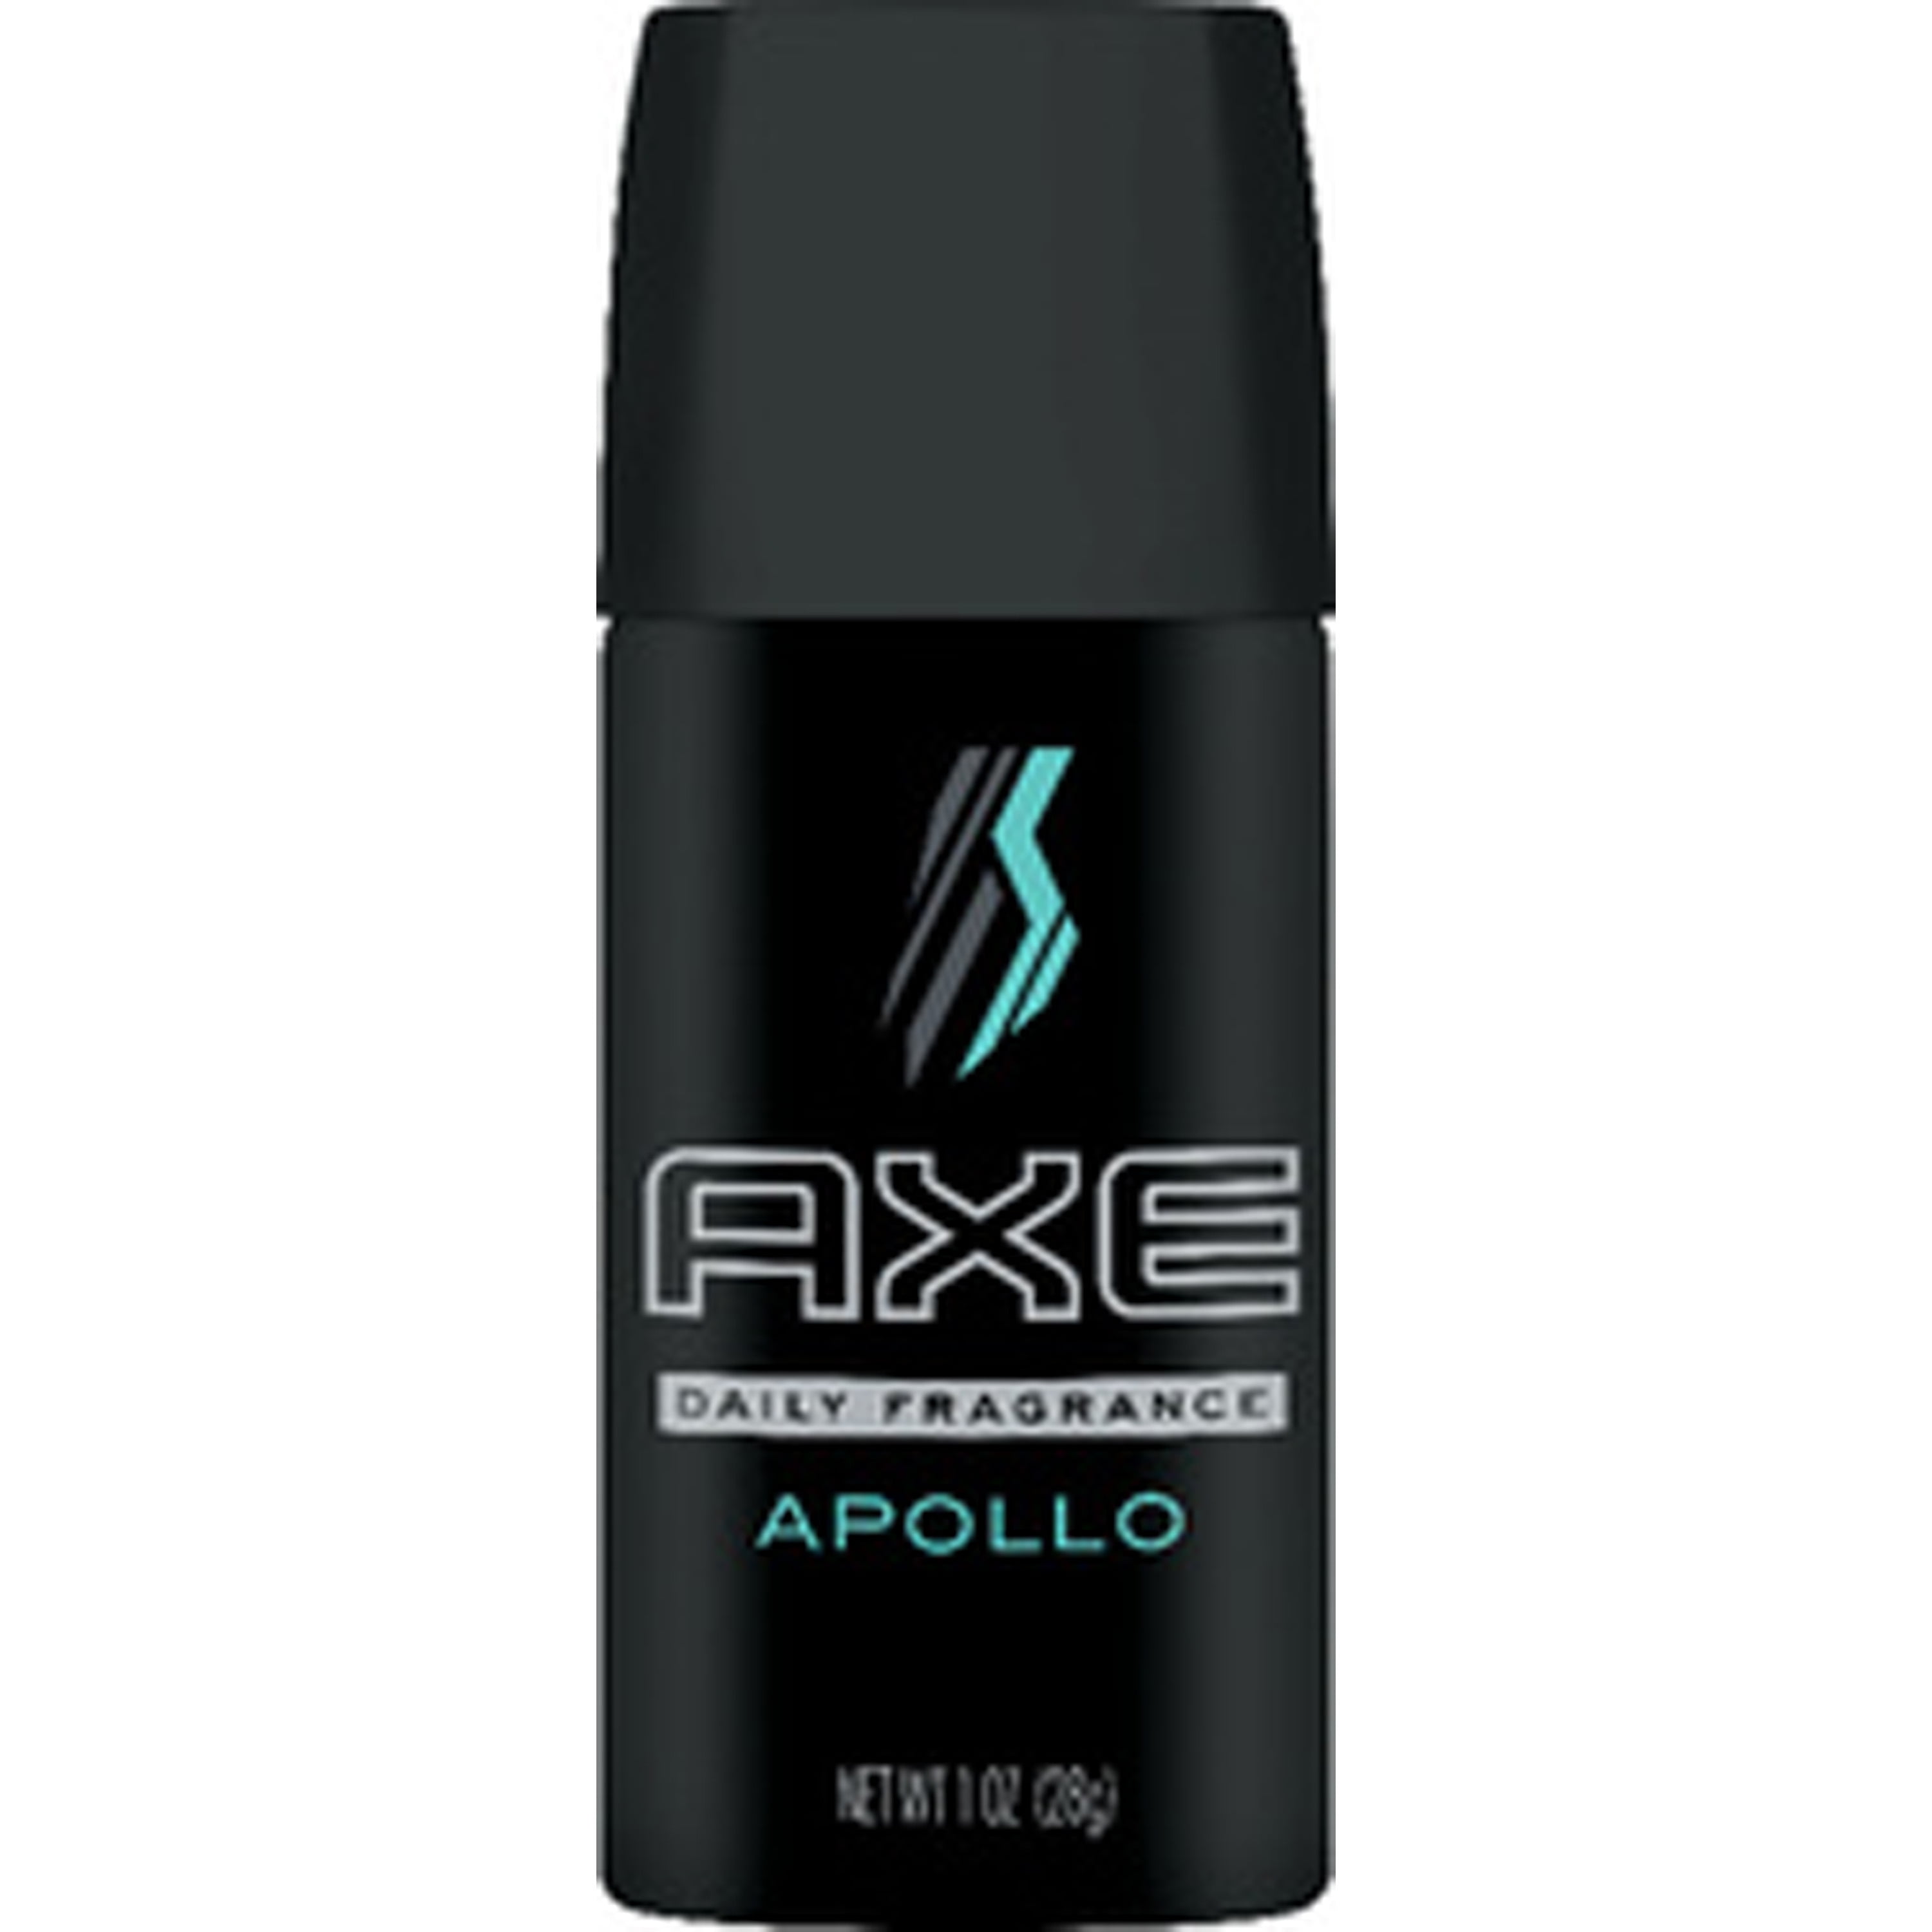 Apollo Deodorant Body Spray